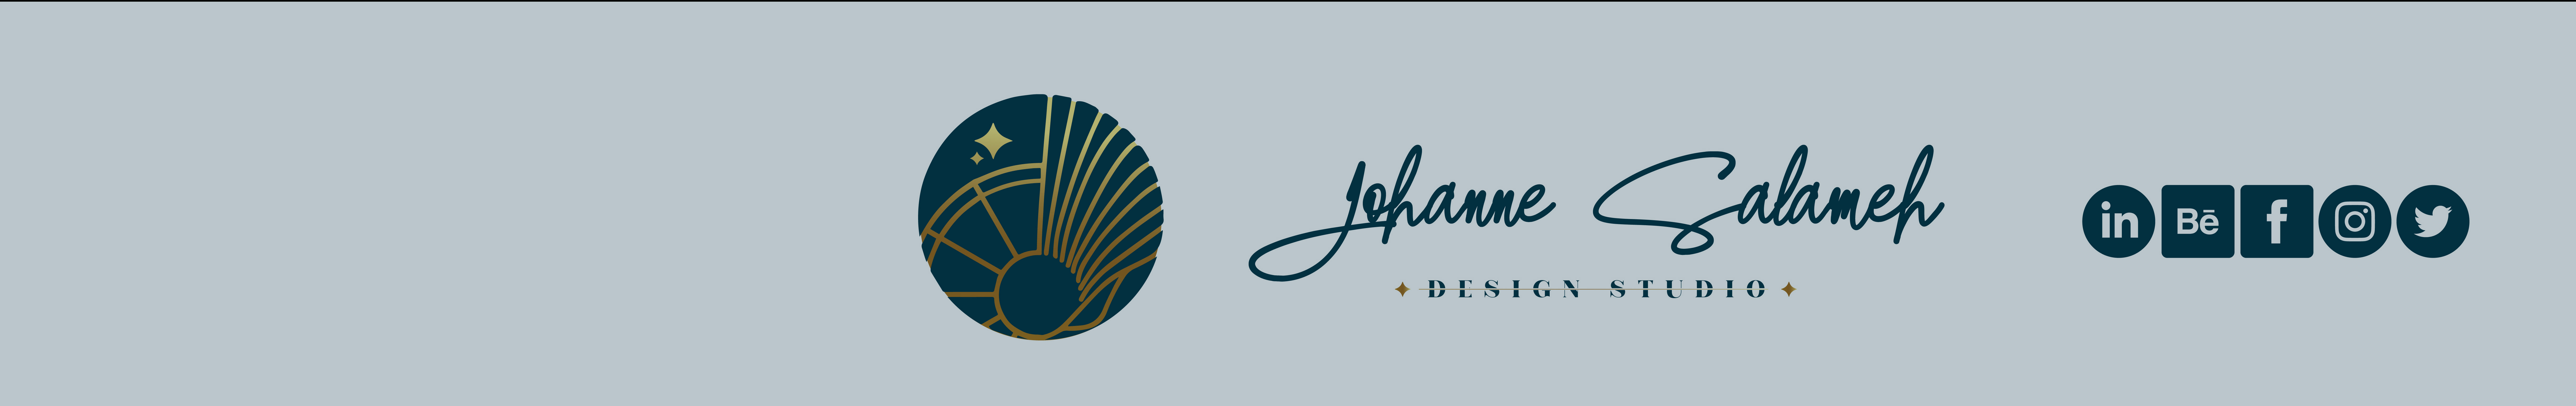 Banner de perfil de Johanne Salameh